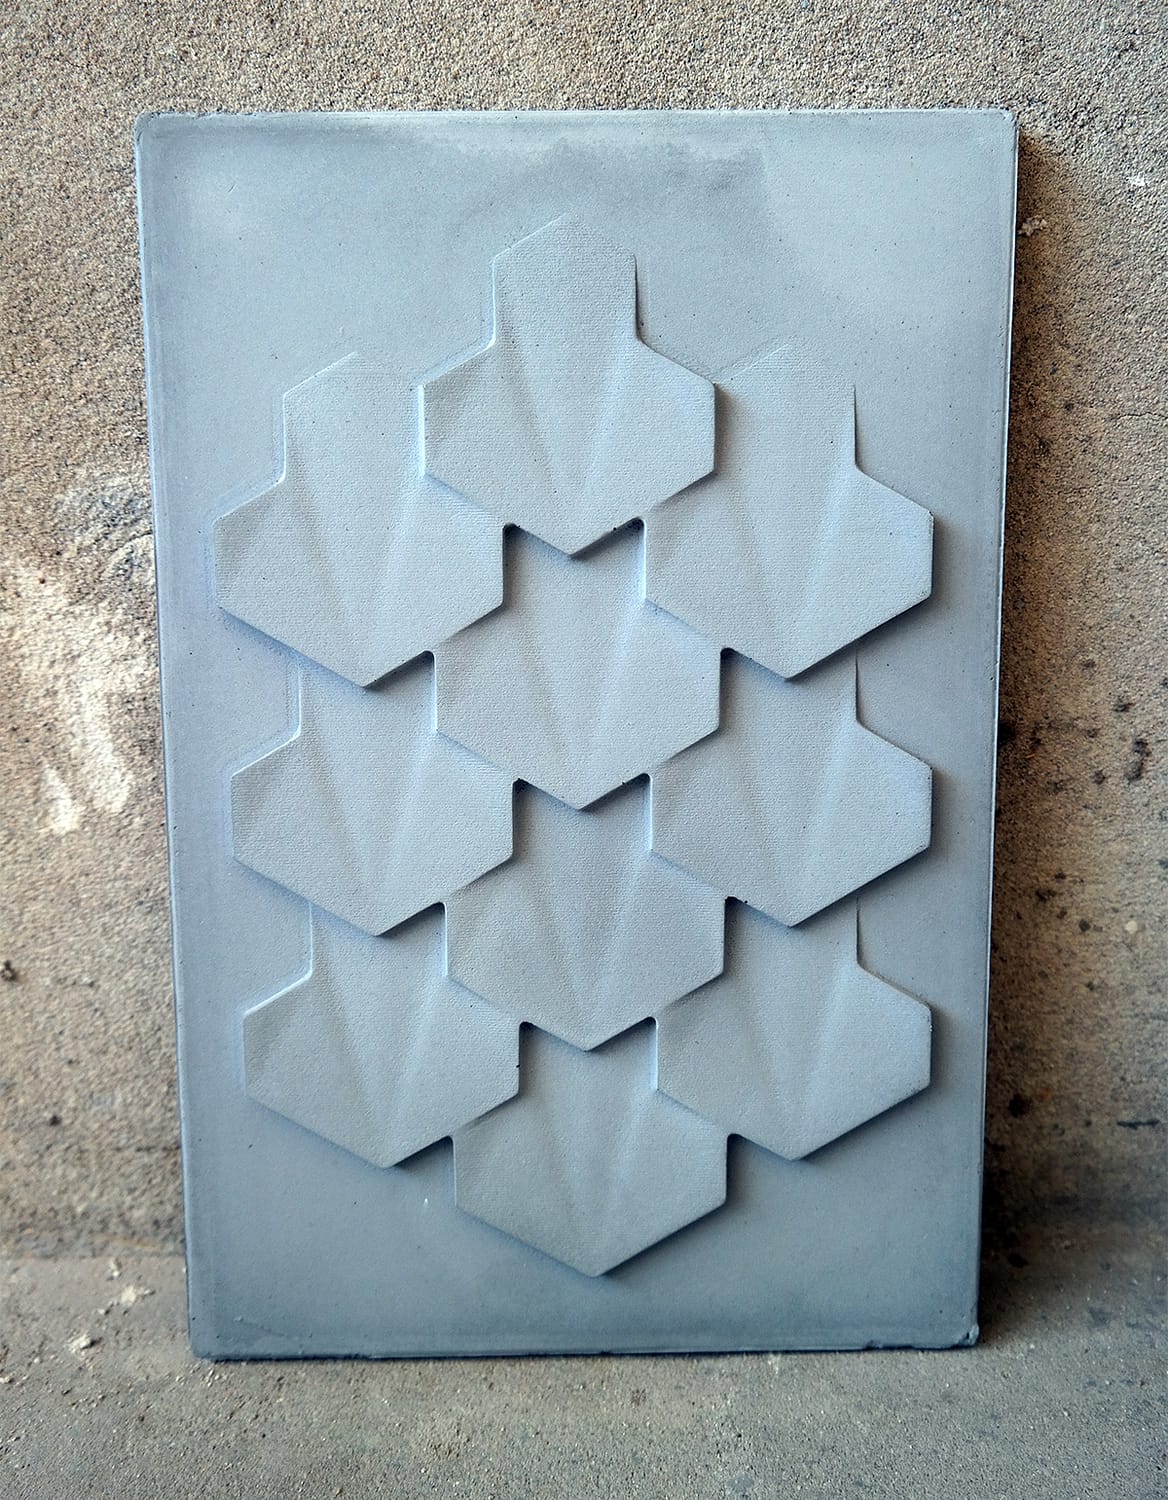 Panel-concrete-schub